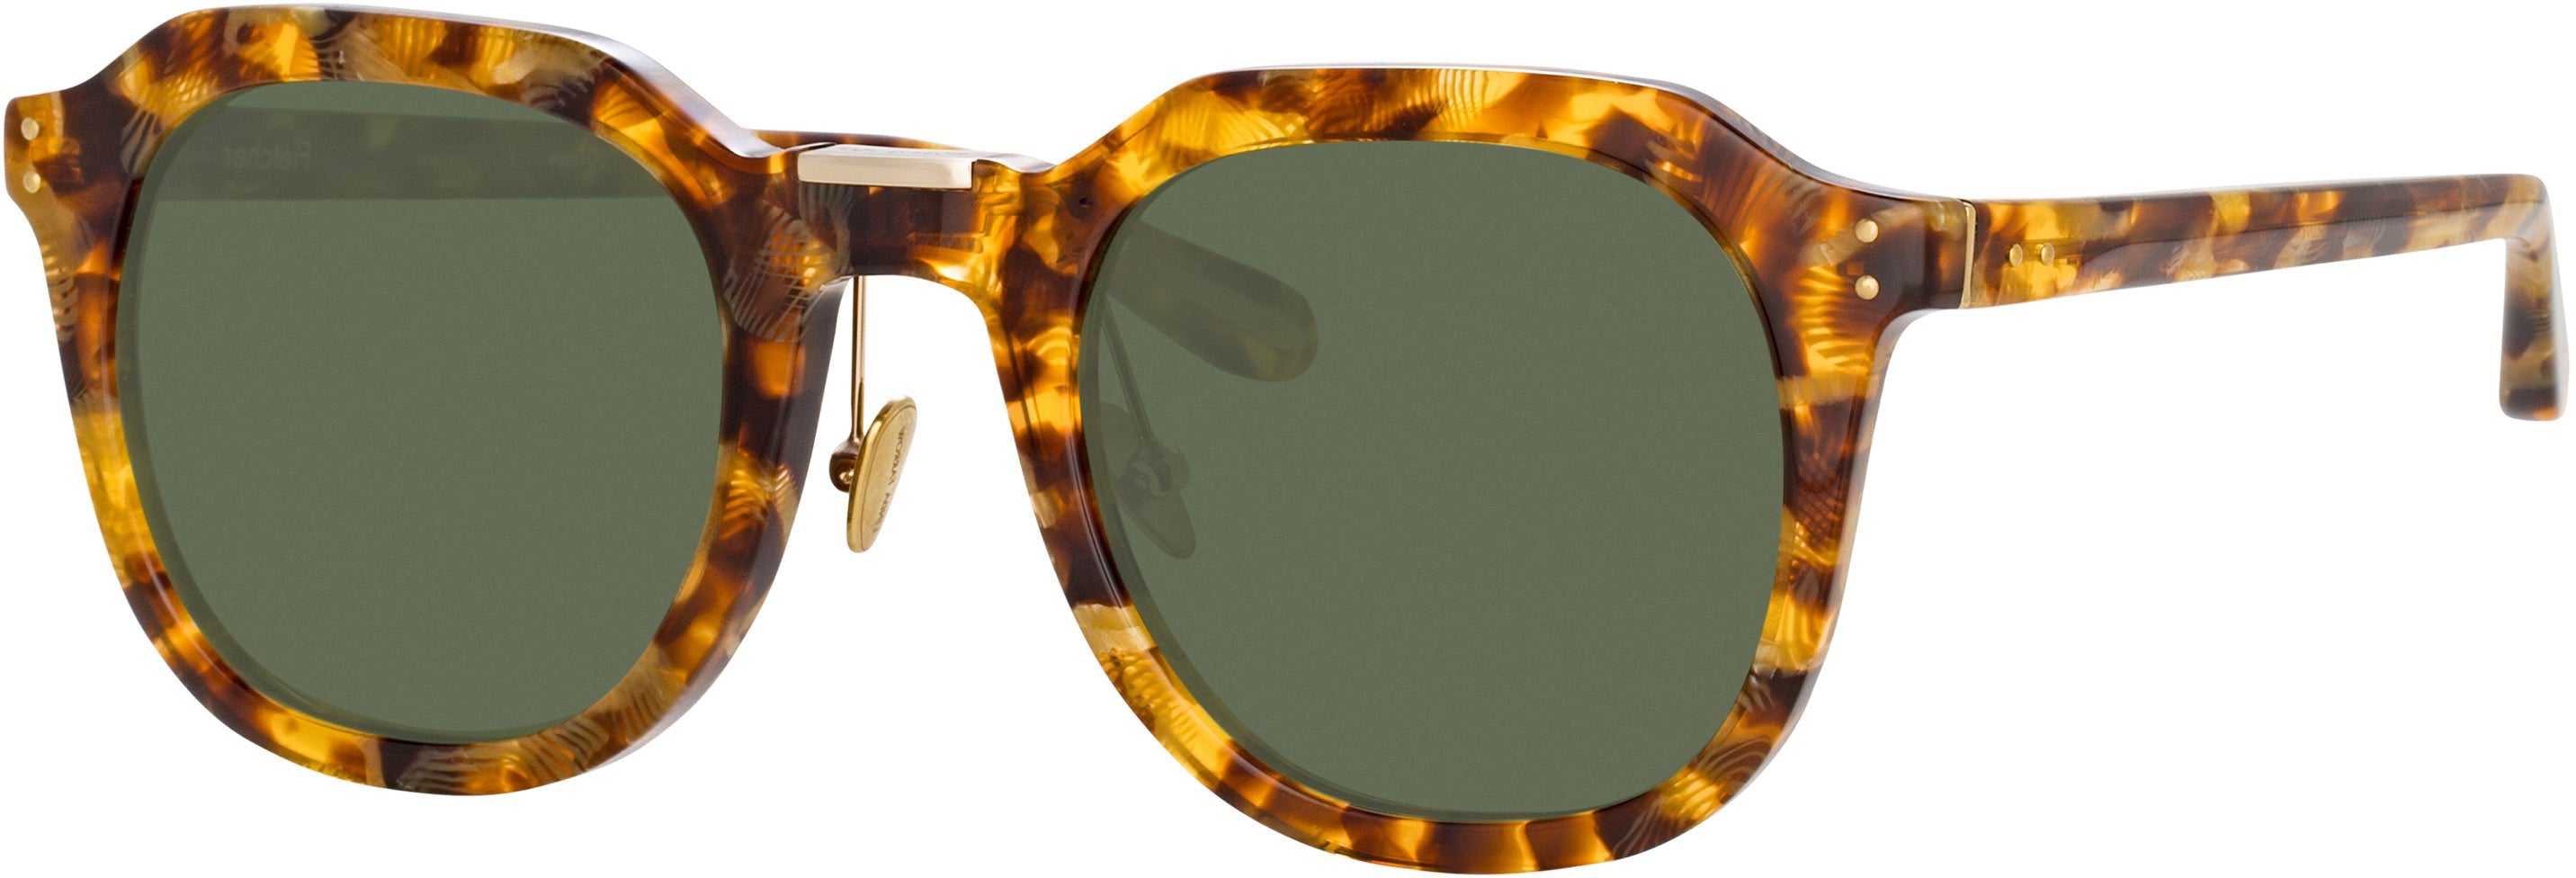 Color_LFL1103C9SUN - Fletcher Angular Sunglasses in Tobacco Tortoiseshell and Green